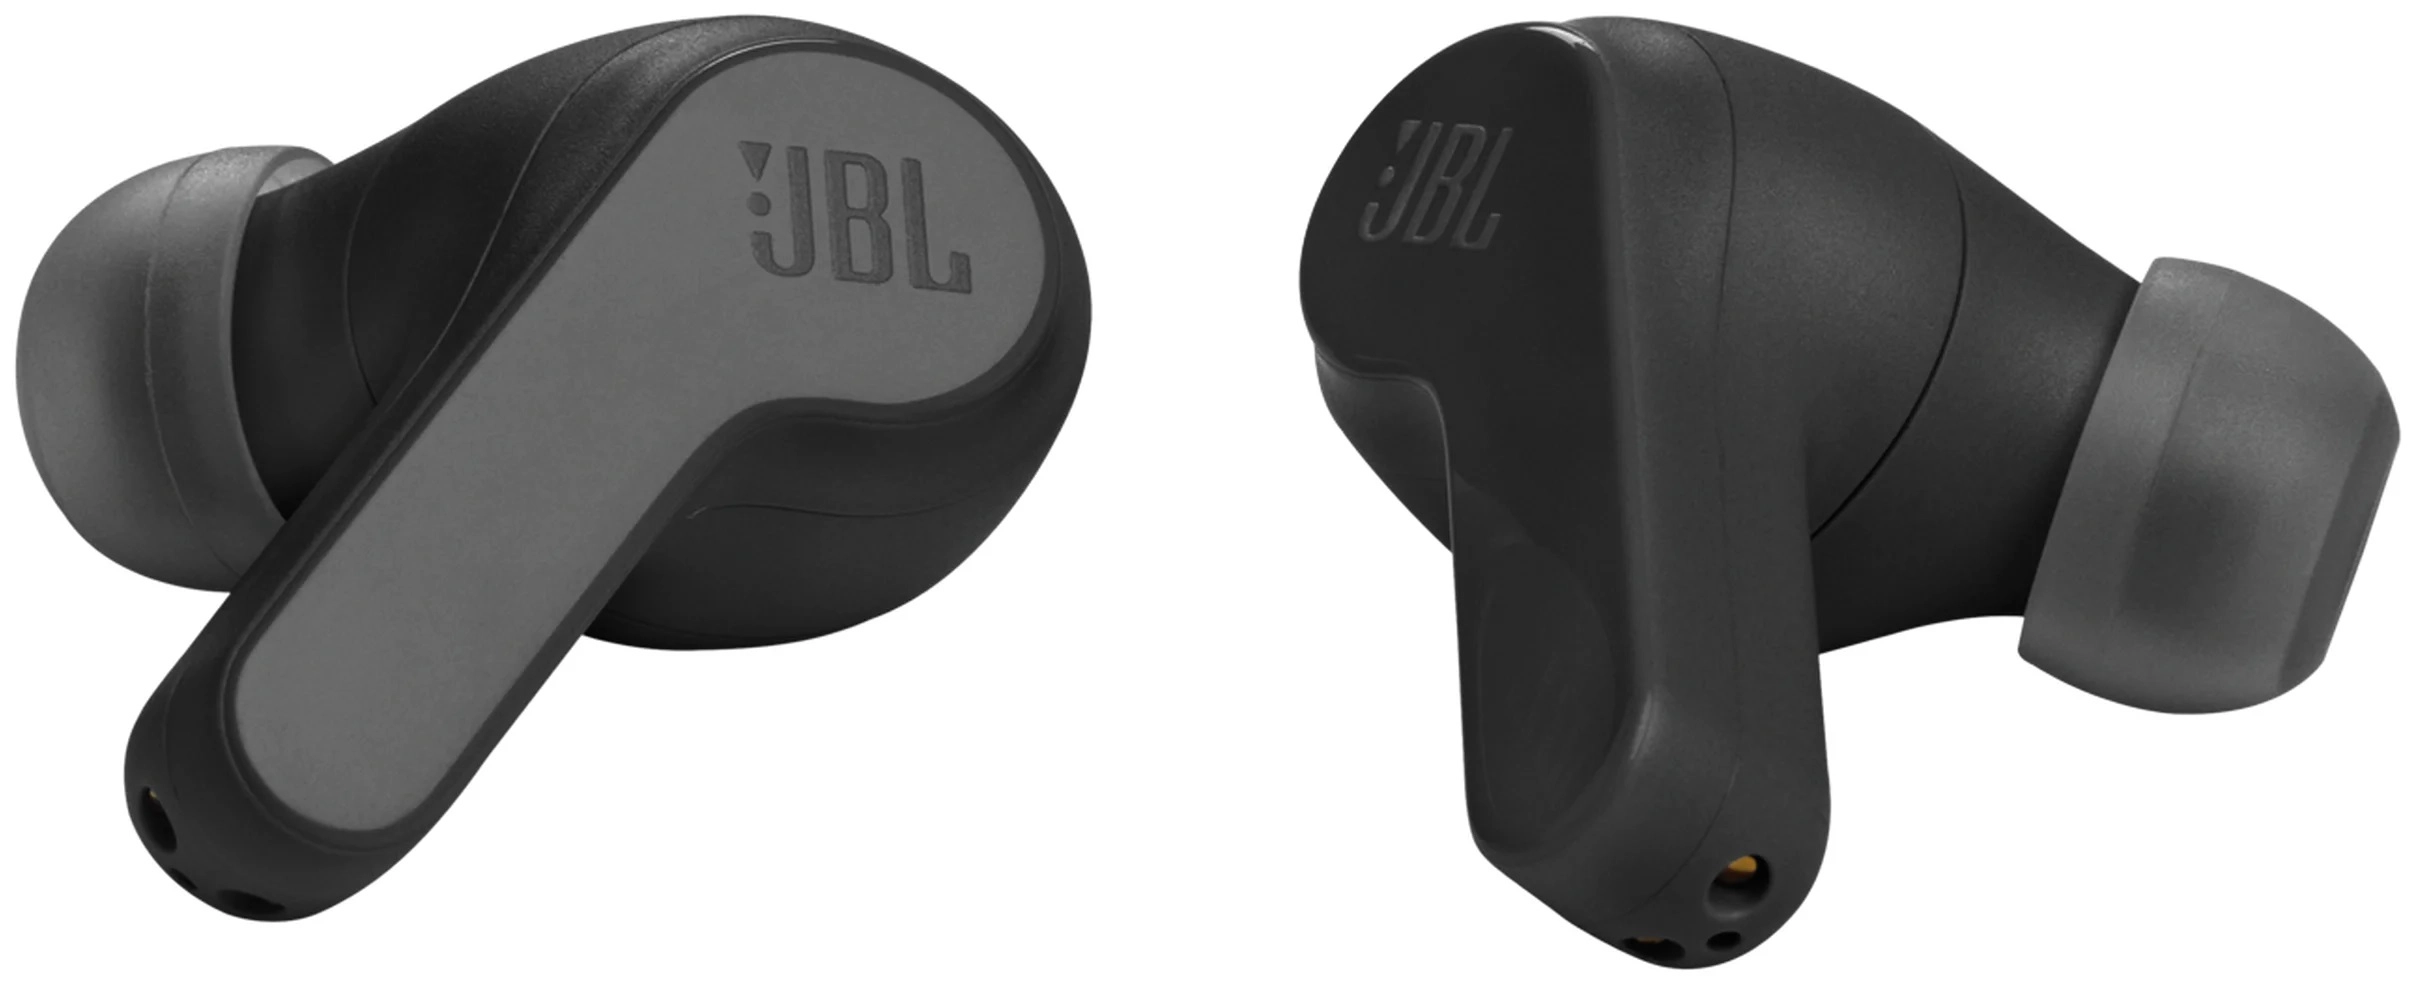 Беспроводные наушники JBL Wave 200 bo'lib to'lash